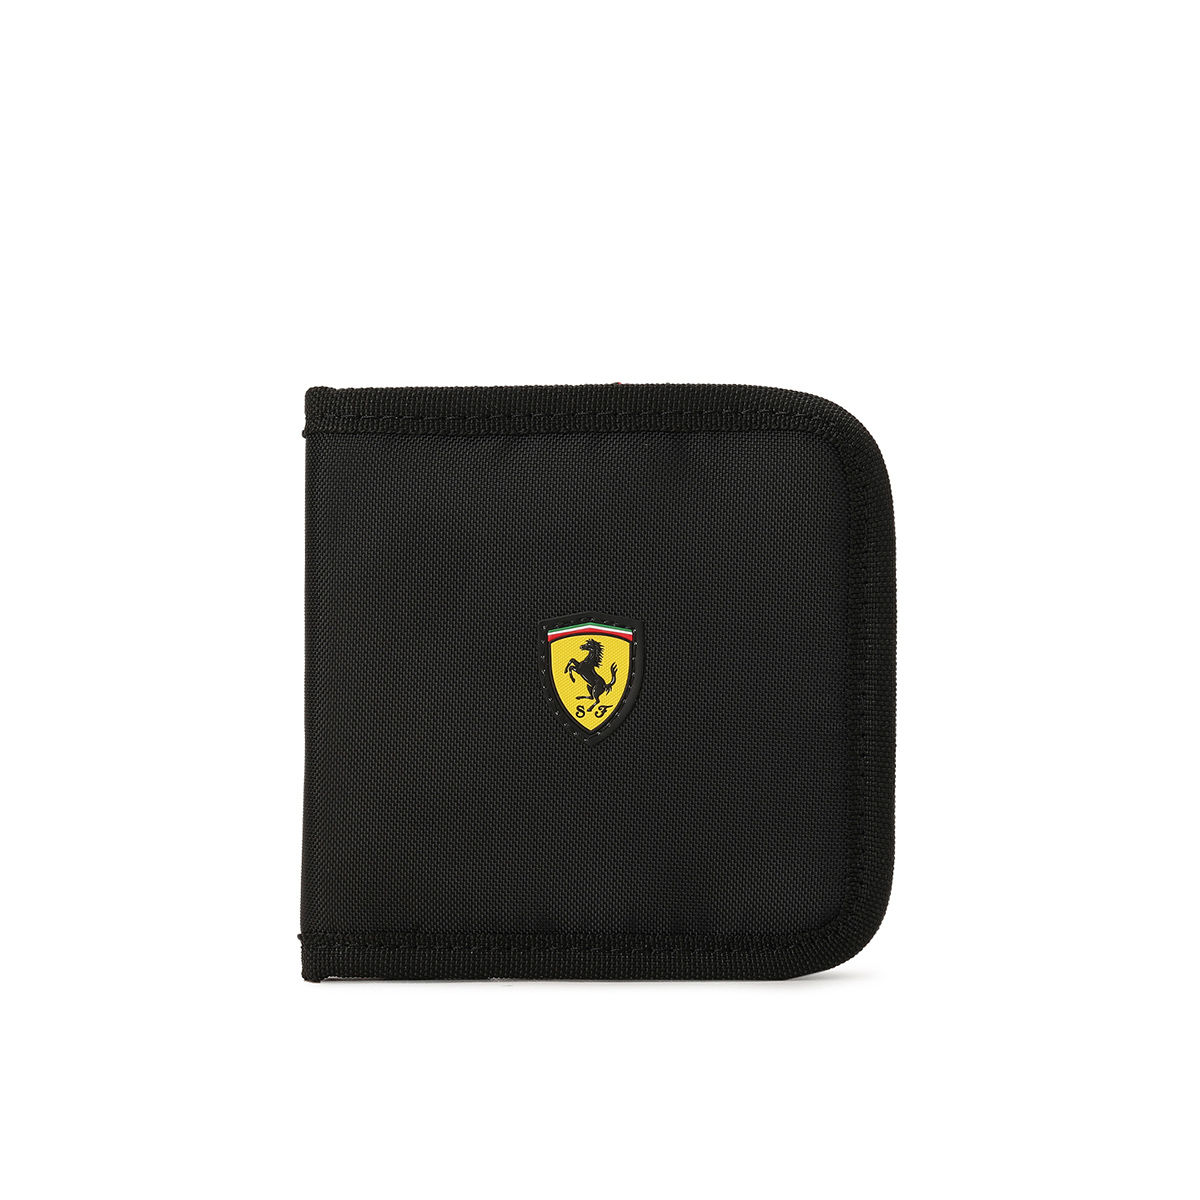 Buy PUMA x Scuderia Ferrari Men's Wallet at Amazon.in